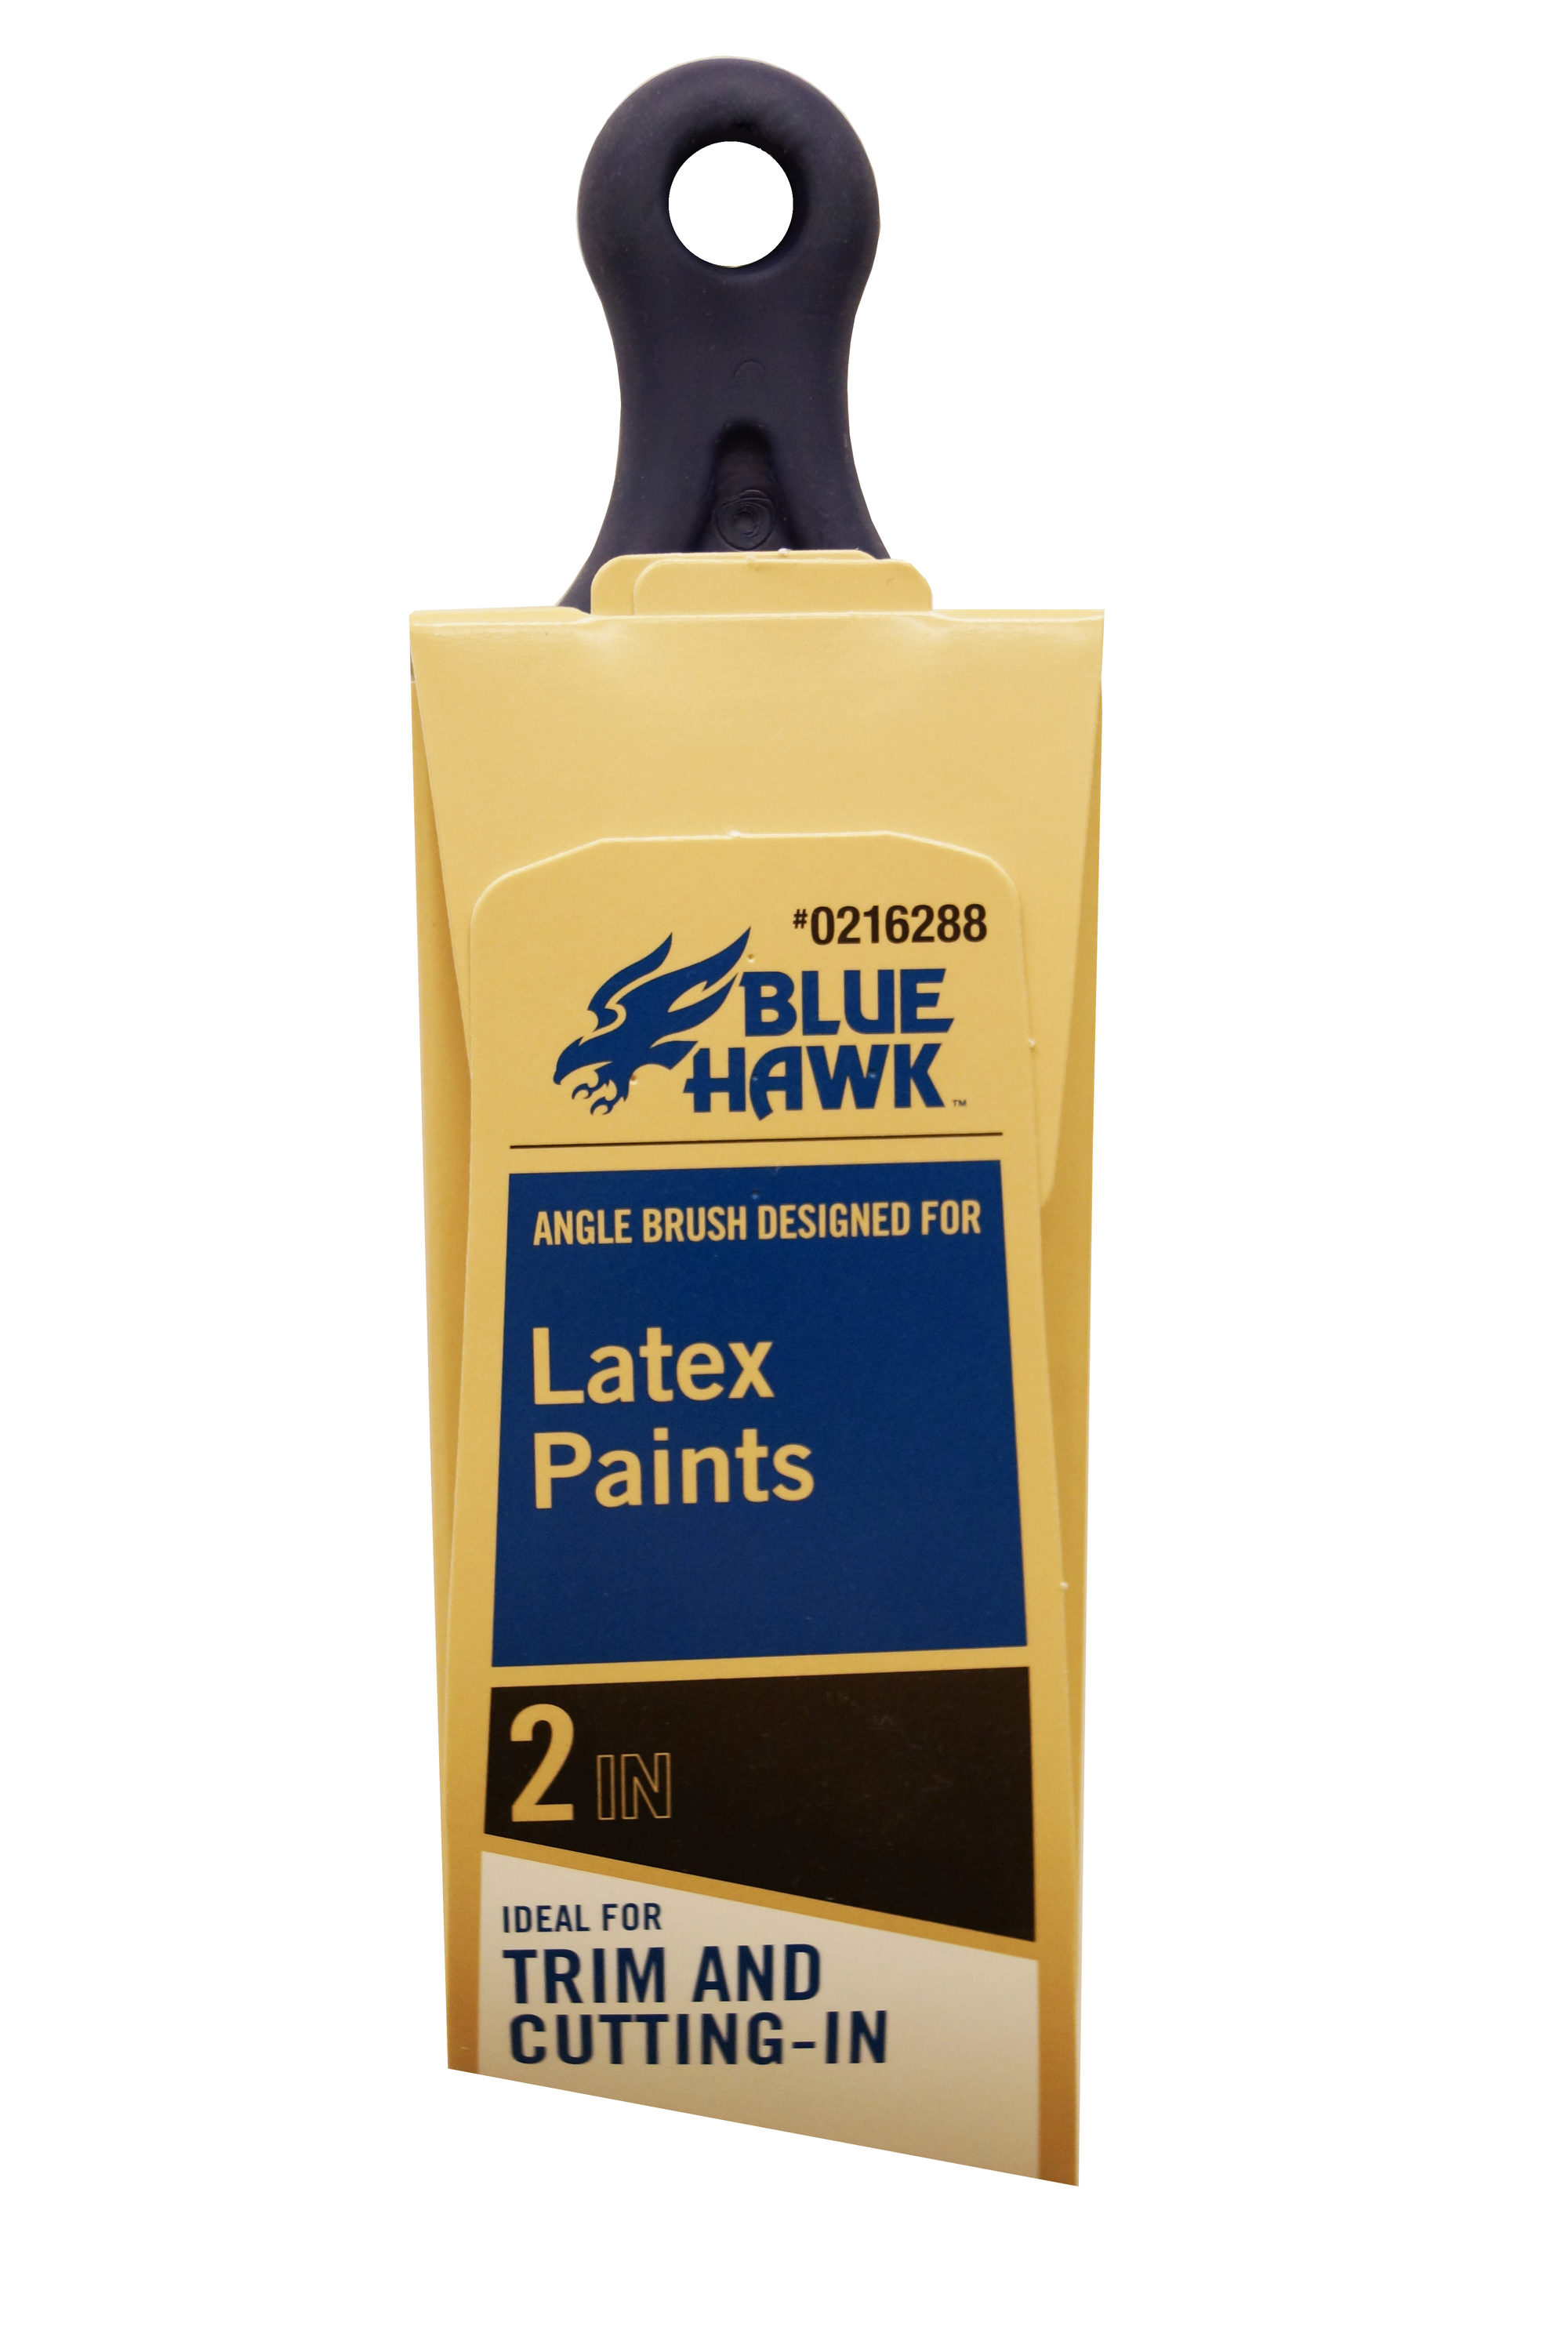 10 BLUE HAWK 2 ANGLED PAINT BRUSH BRUSHES LATEX TRIM CUTTING IN